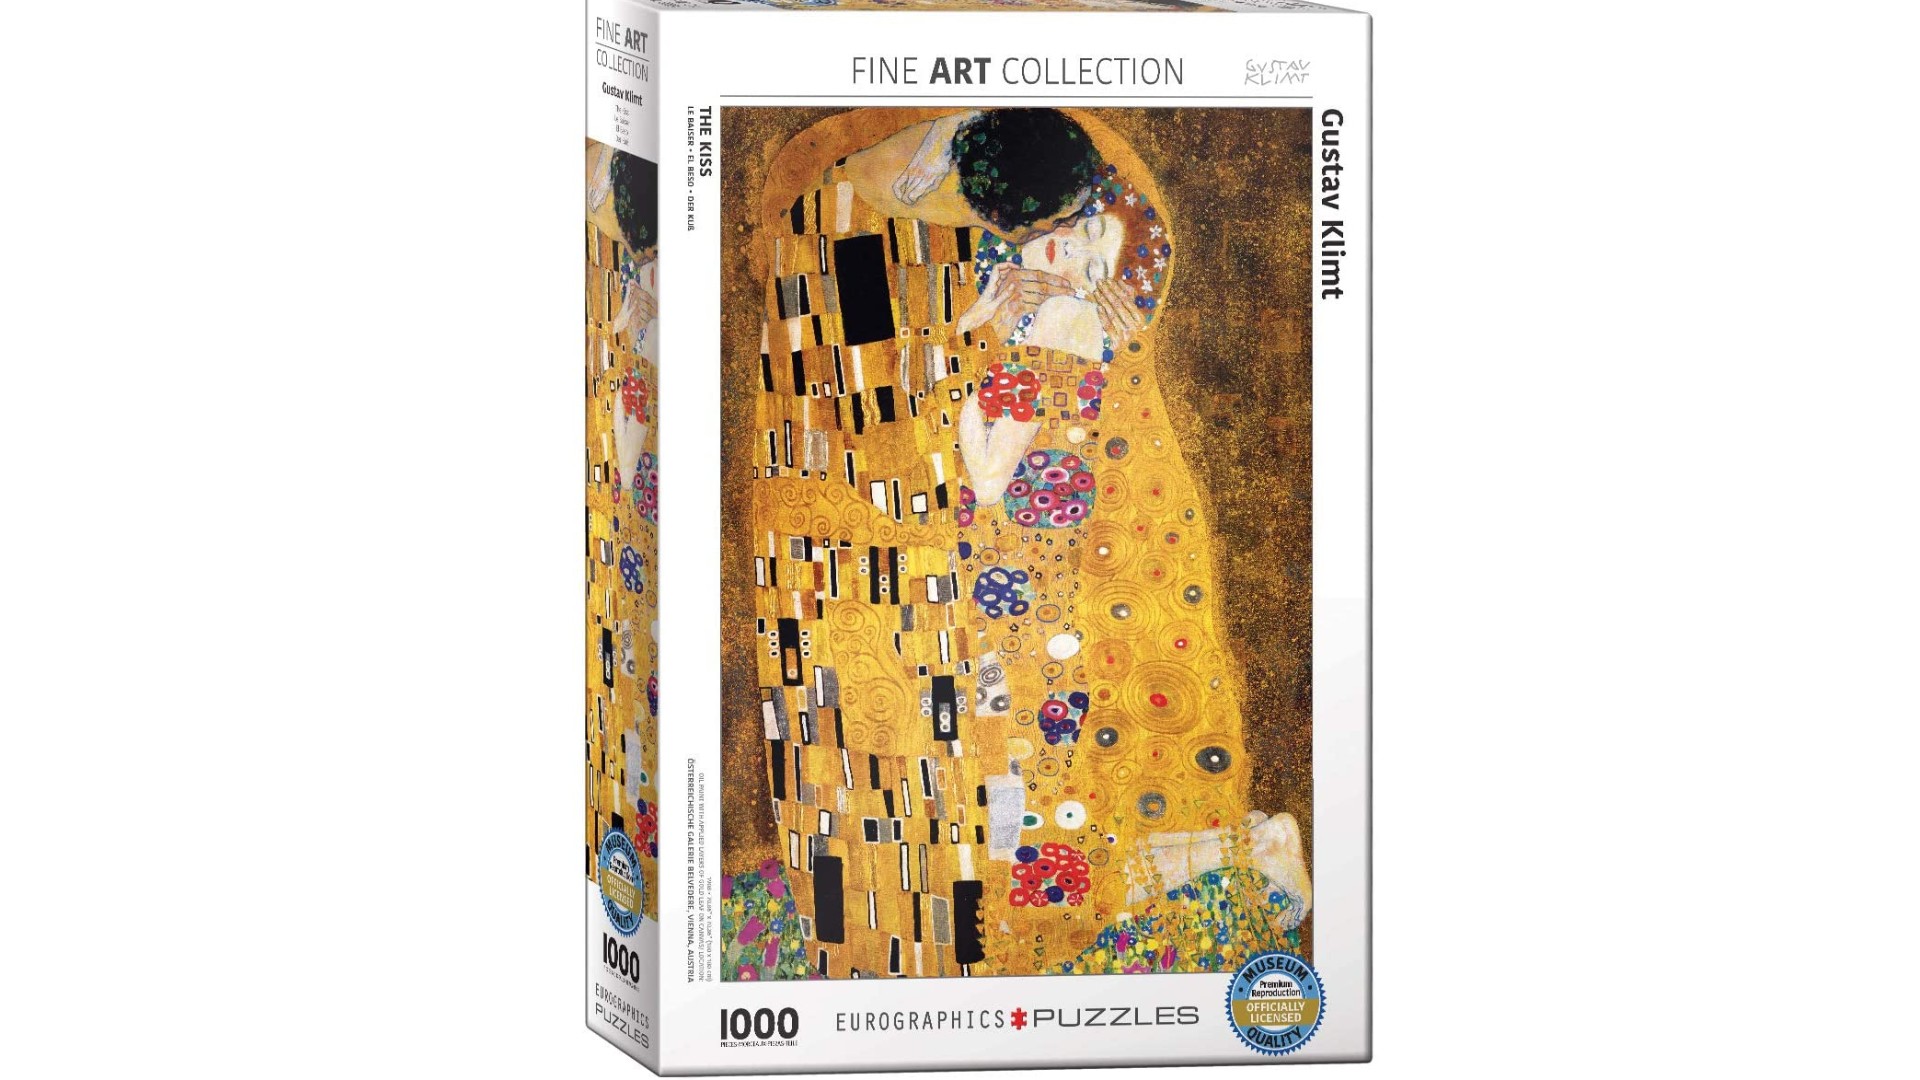 Jigsaw puzzle box featuring Gustav Klimt's The Kiss